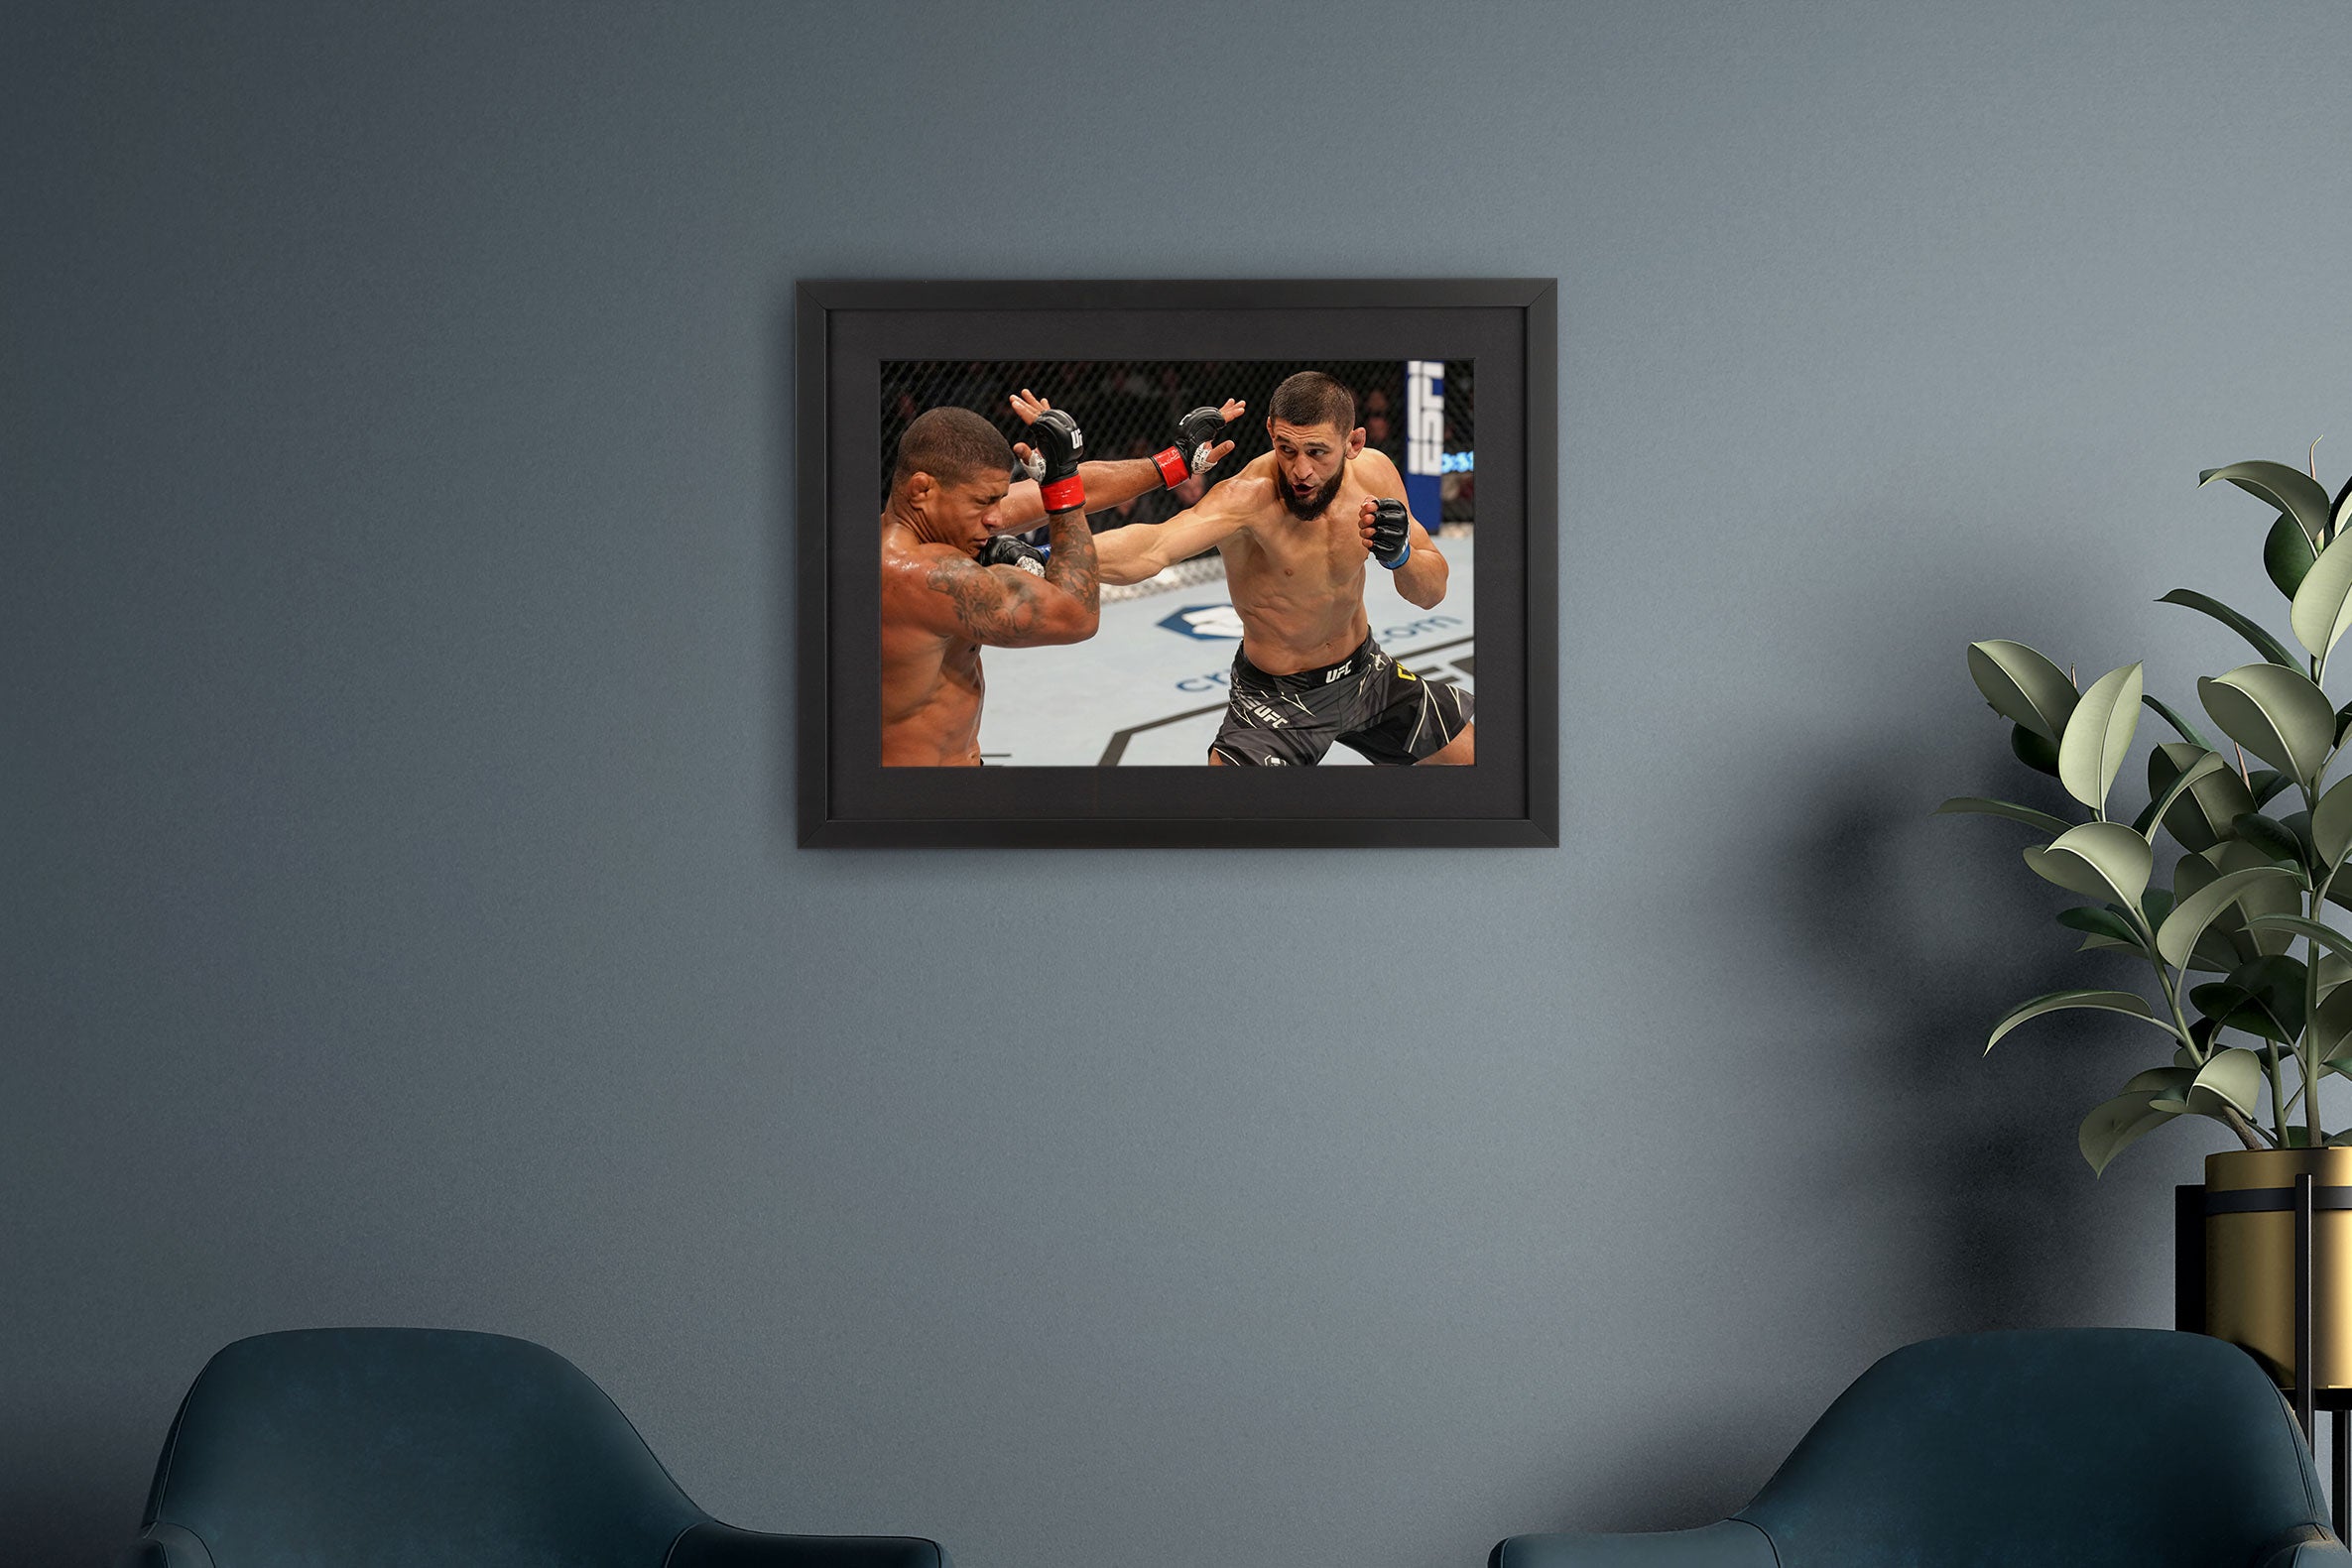 Khamzat Chimaev Framed Photo UFC 273